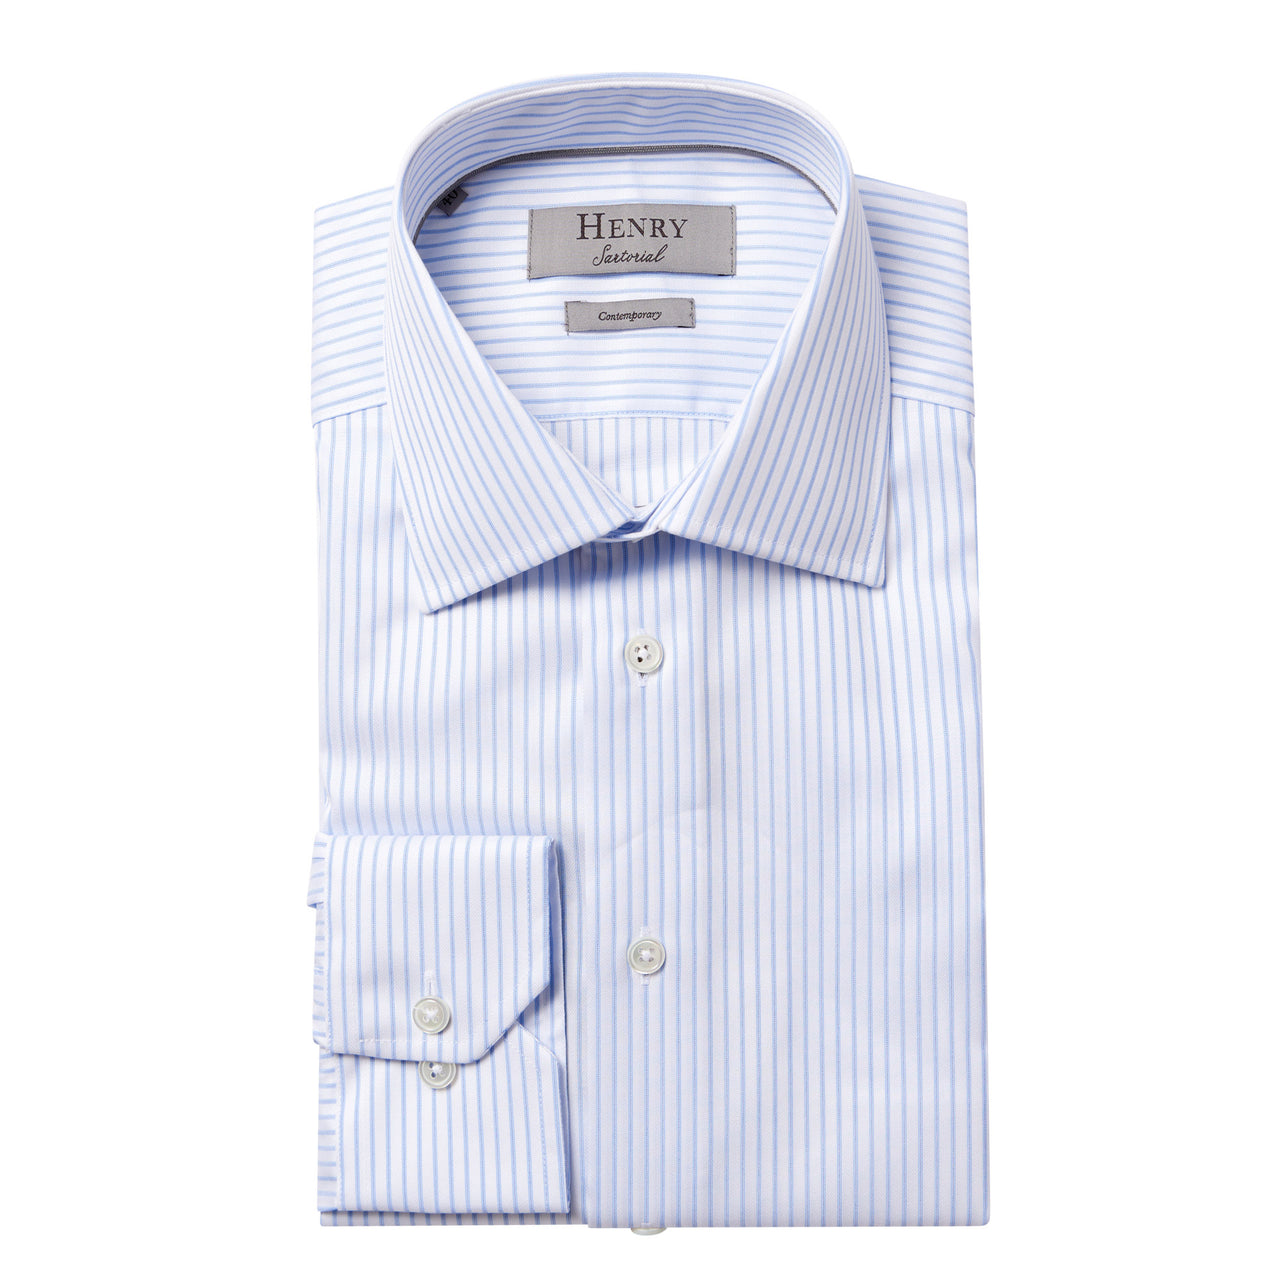 HENRY SARTORIAL Stripe Business Shirt Single Cuff Contemporary Fit LIGHT BLUE/WHITE